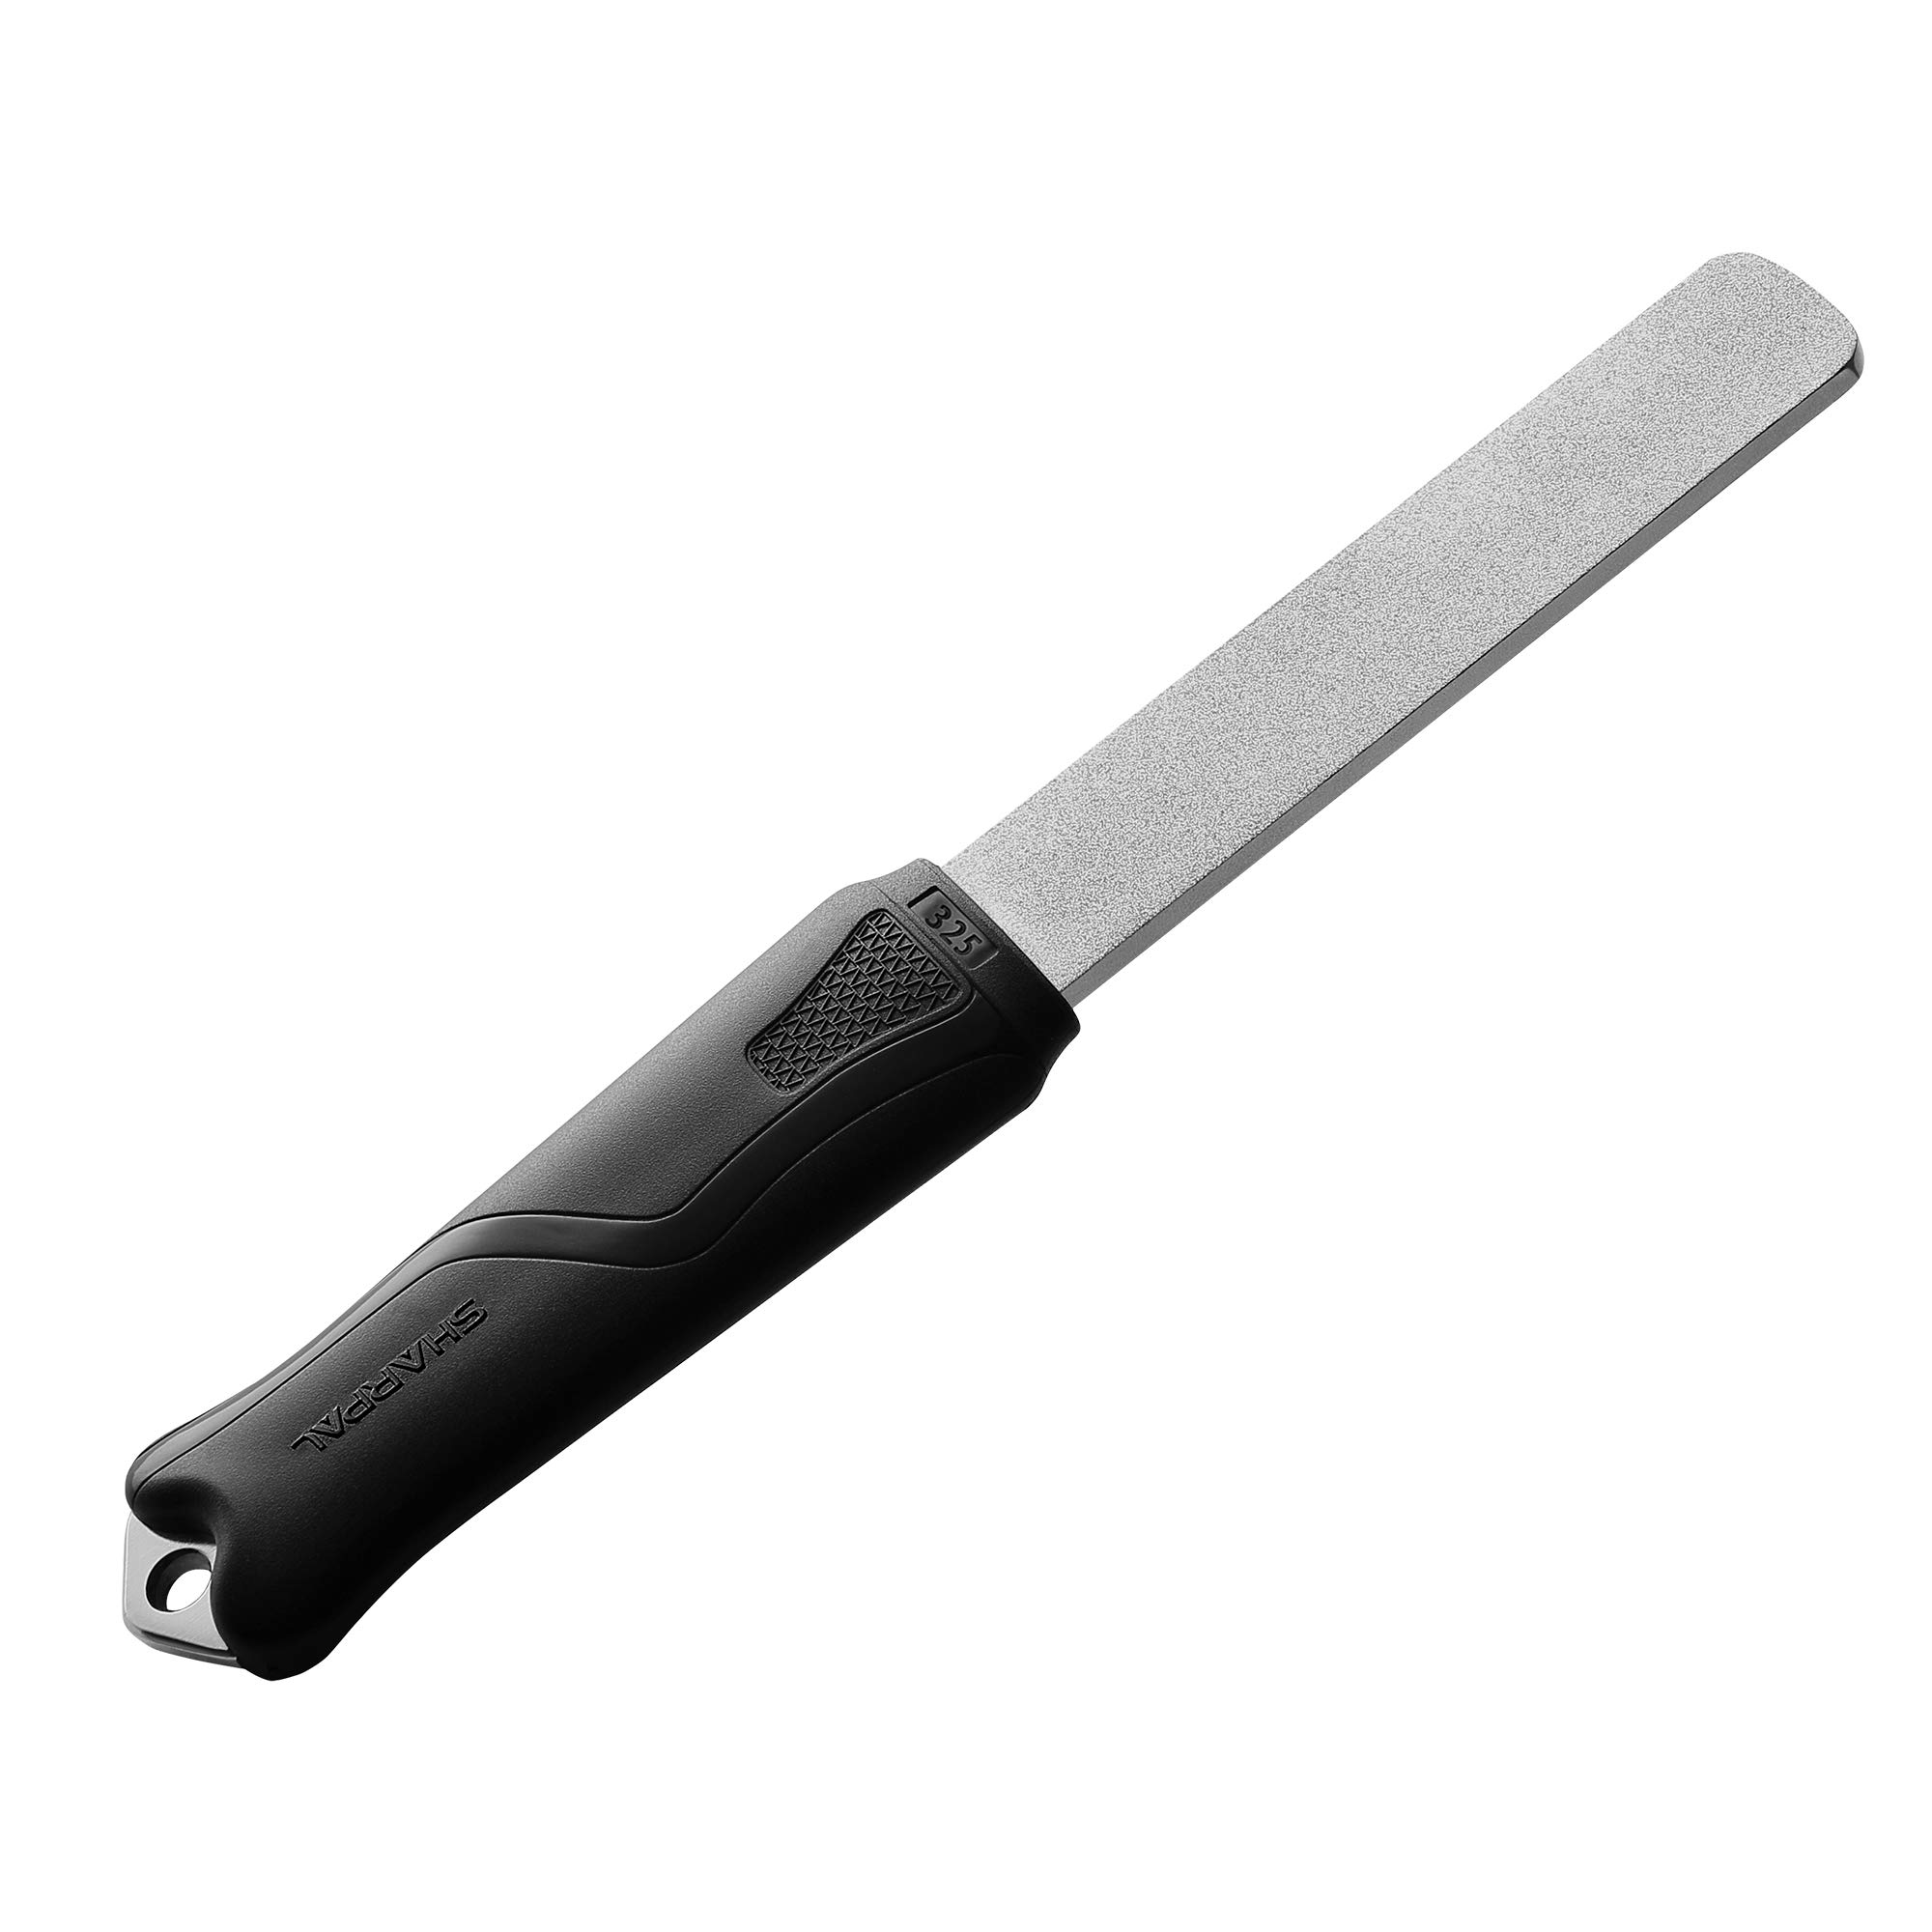 Sharpal 121N Dual-Grit Diamond Sharpening Stone File Tool Sharpener For Sharpening Knife, Axe, Hatchet, Lawn Mower Blade, Garden